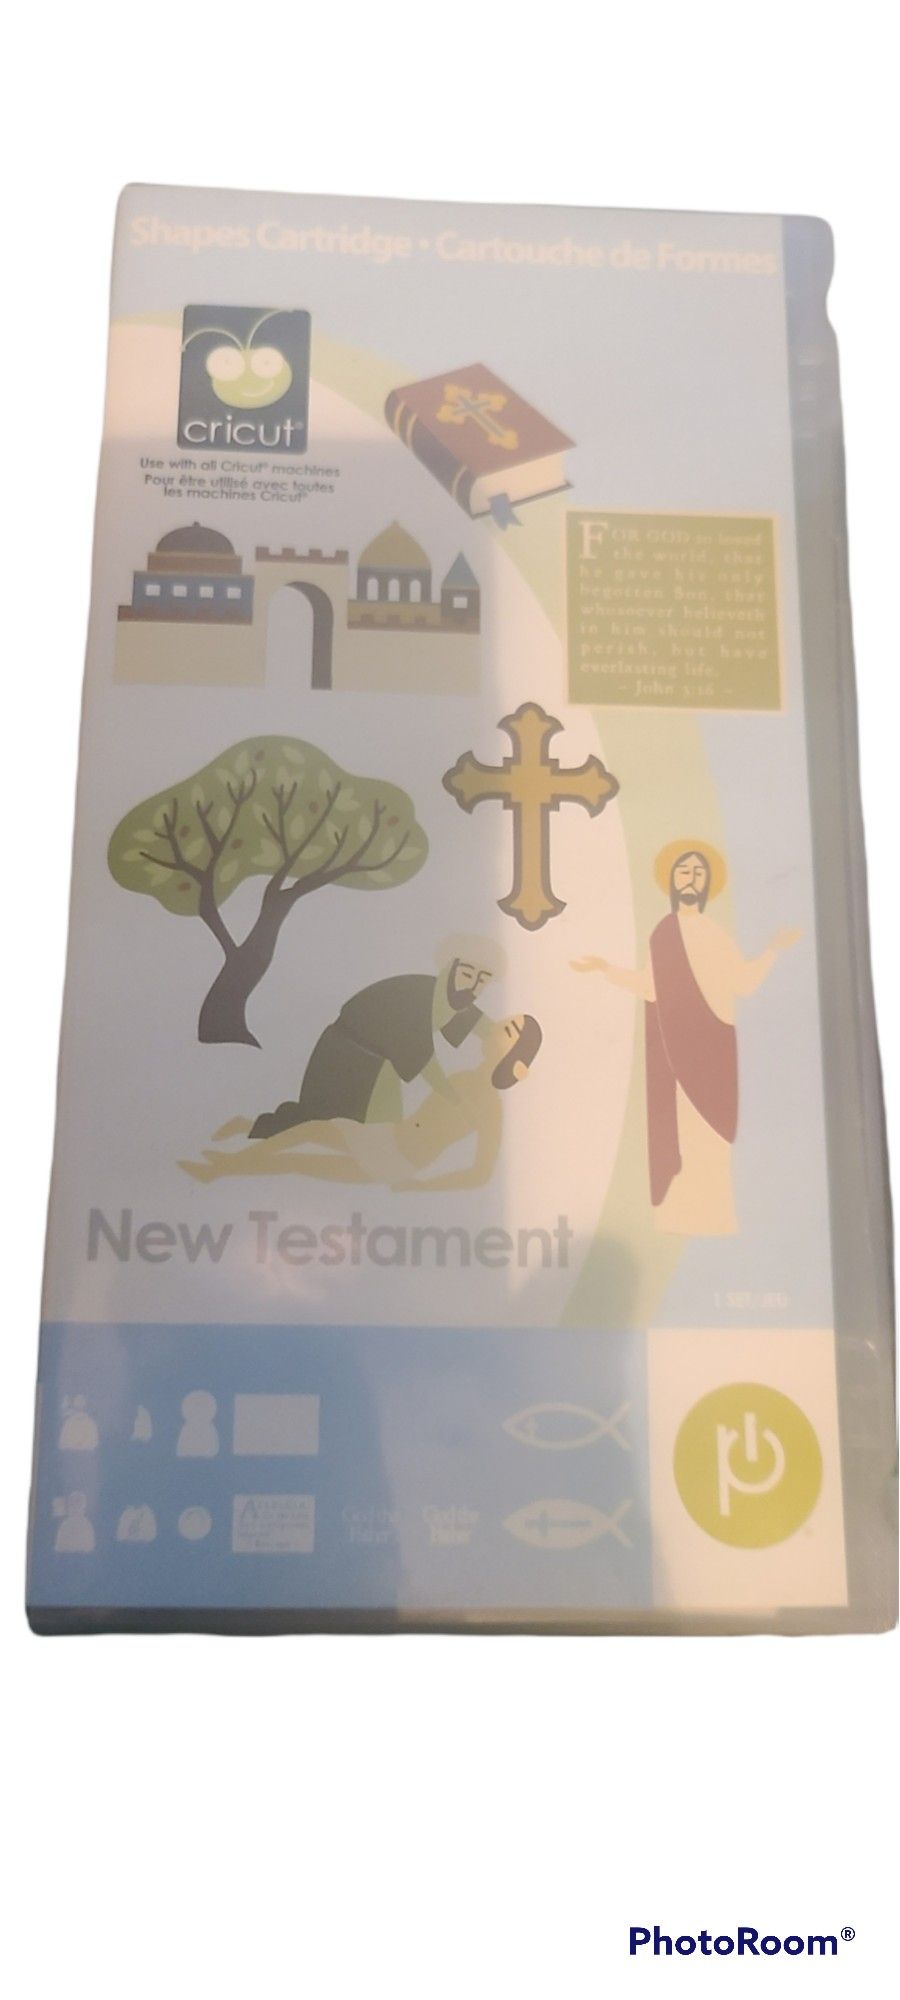 Cricut New Testament Shapes Cartridge IOB Layered Images Crosses Scripture More.